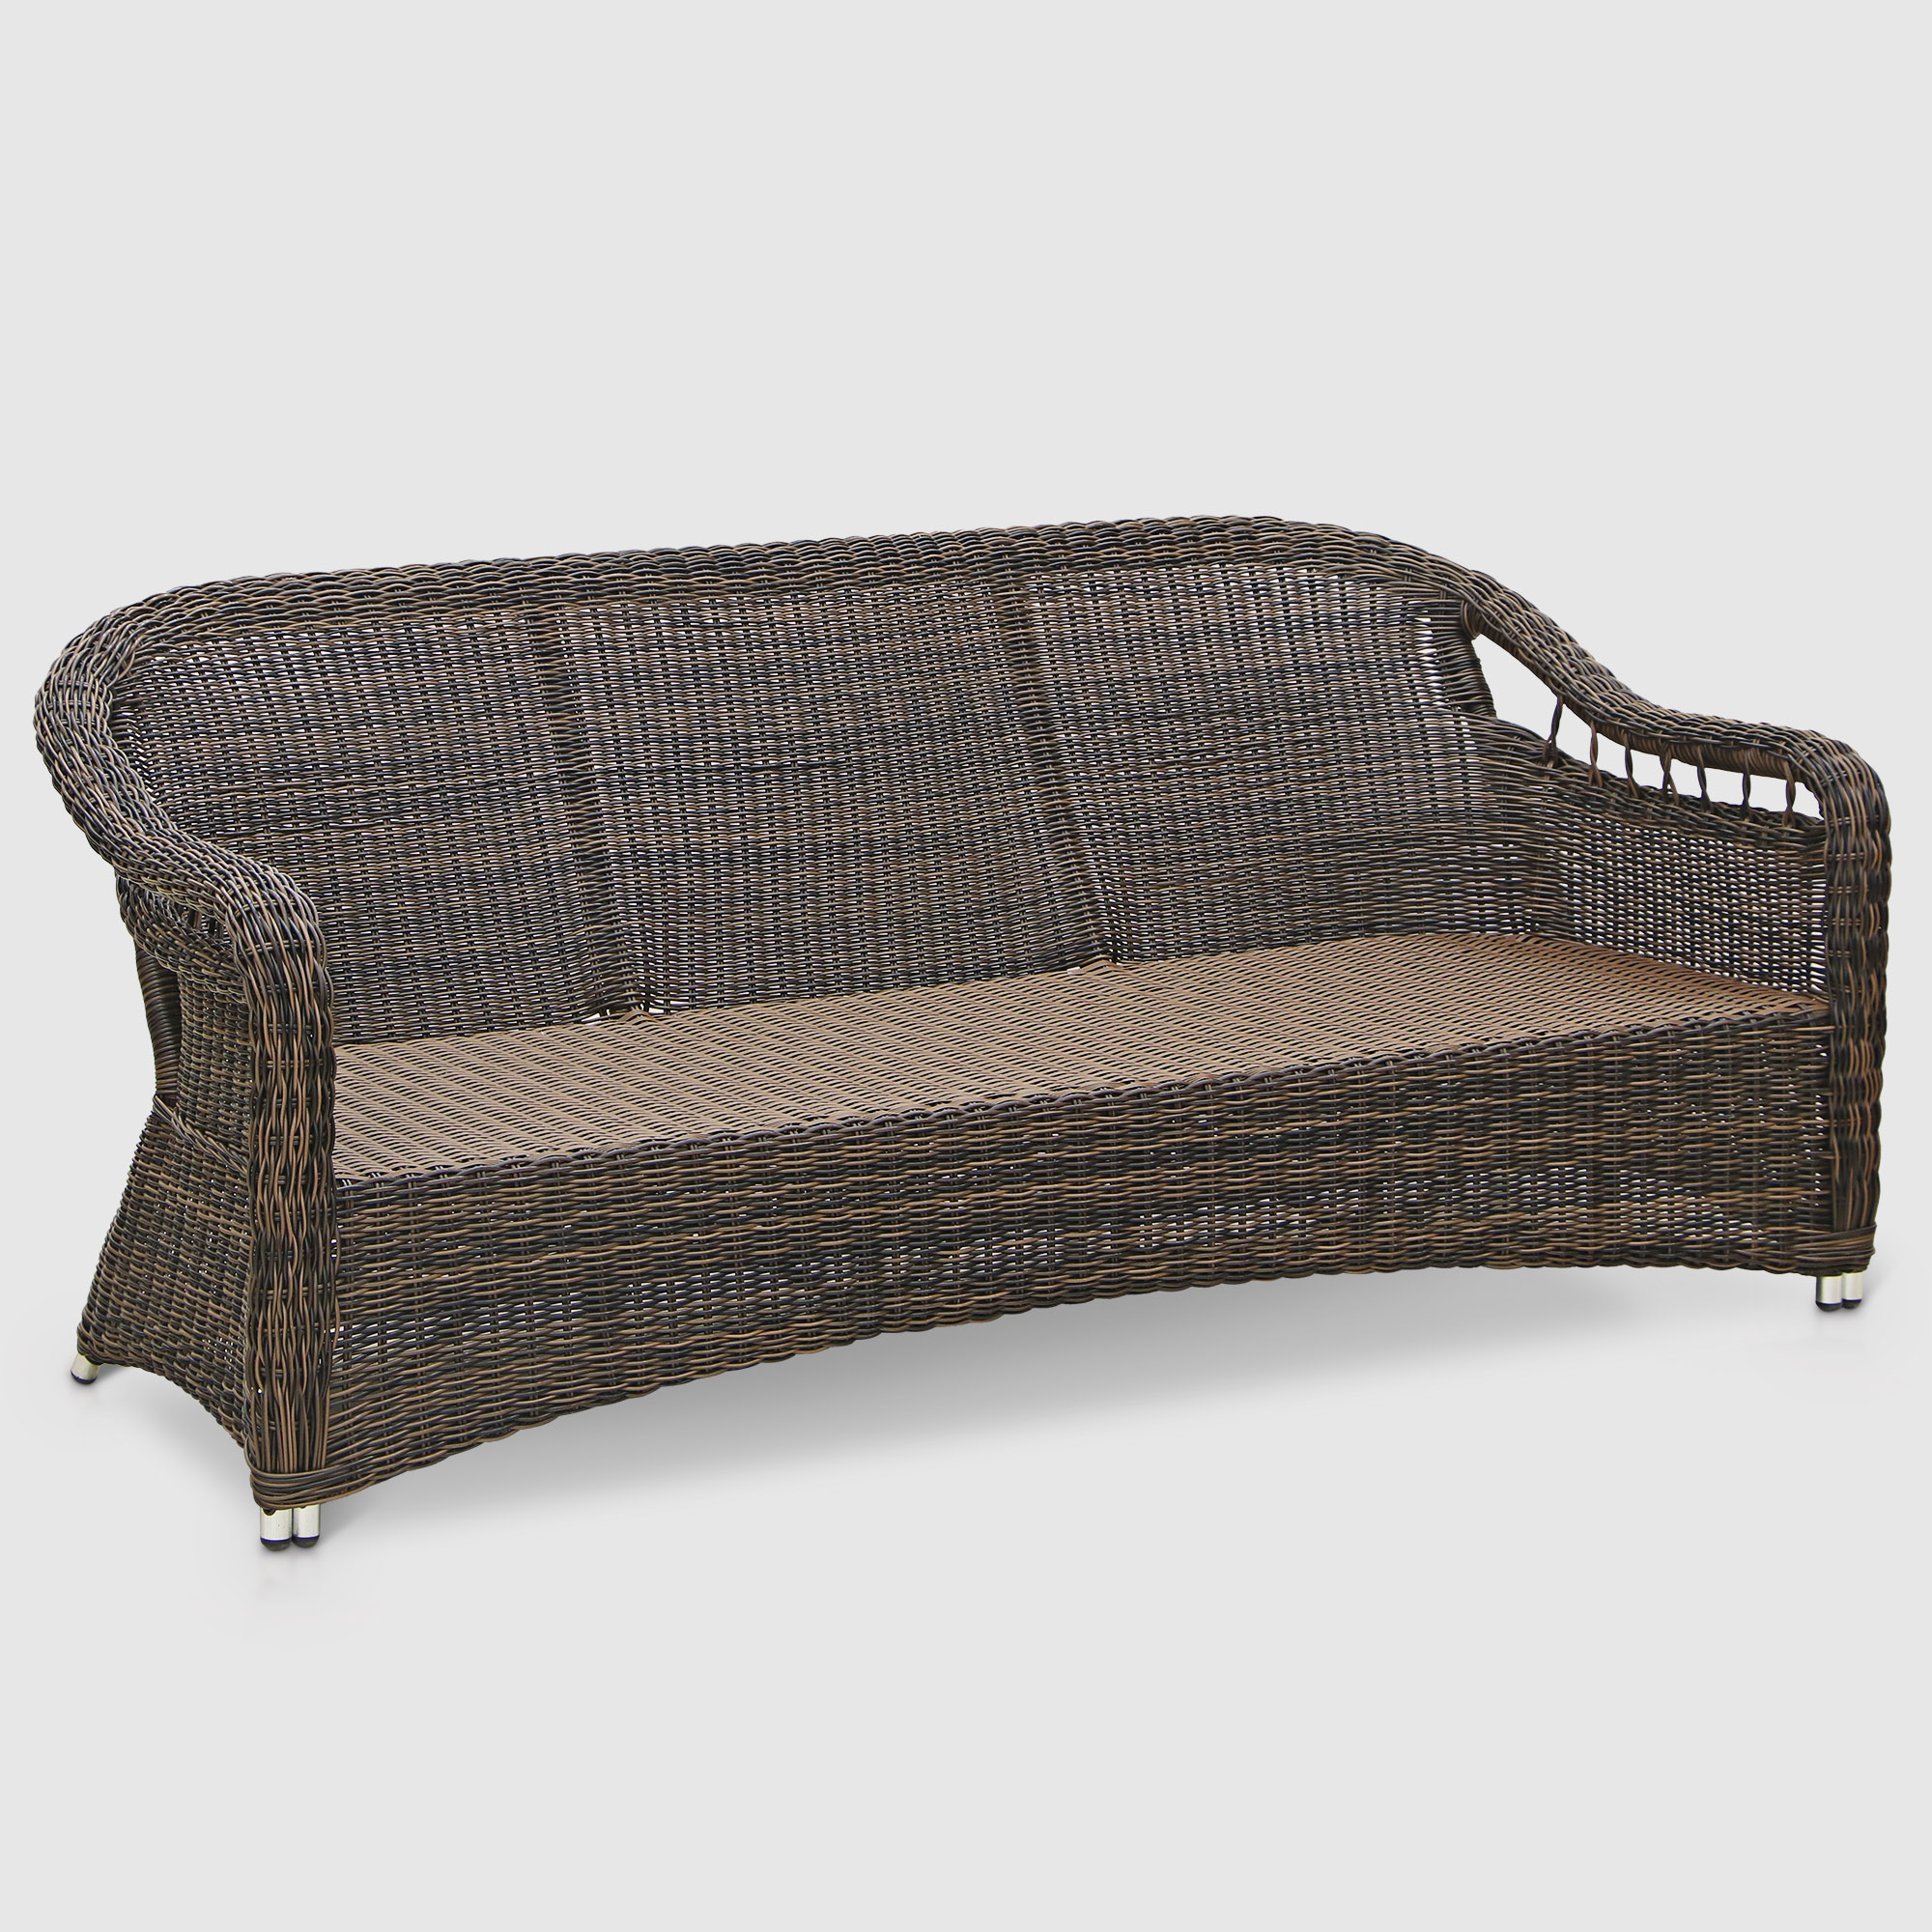 Комплект мебели NS Rattan Sky коричневый с бежевым 4 предмета, цвет бежевый, размер 180х78х78 - фото 4